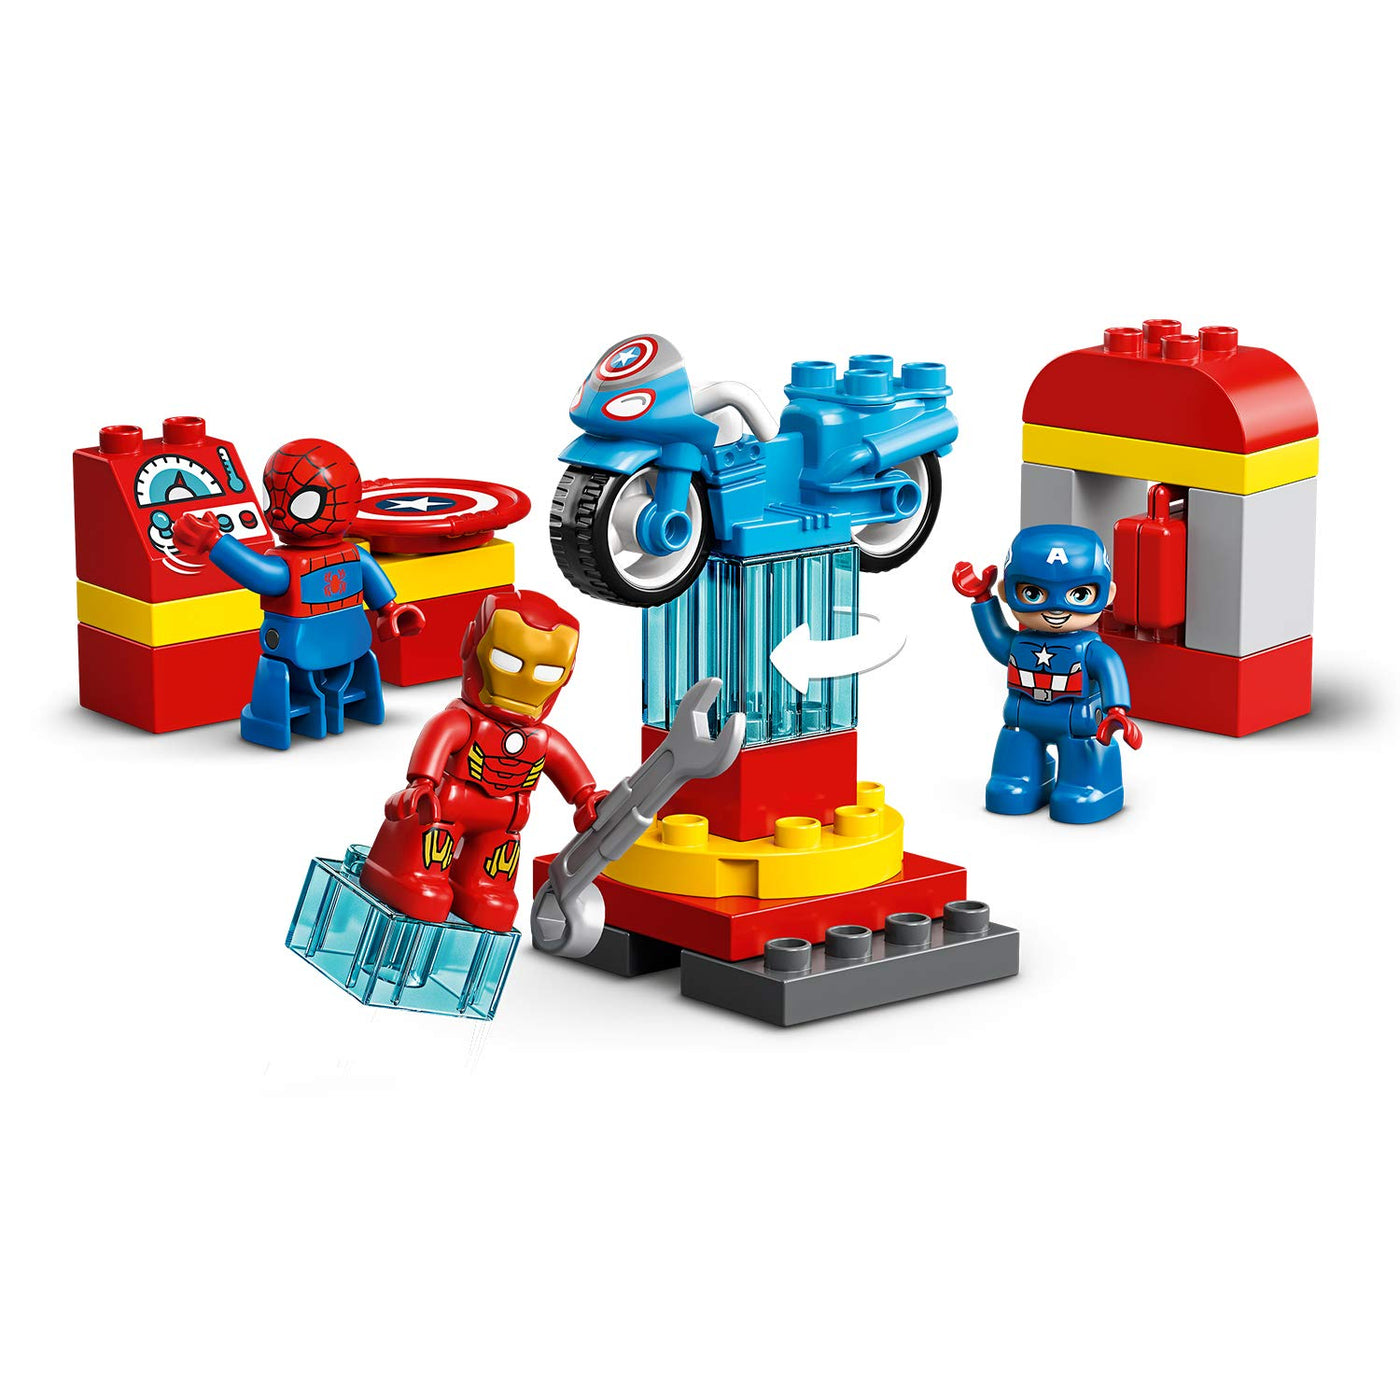 LEGO DUPLO Super Heroes Lab, 10921